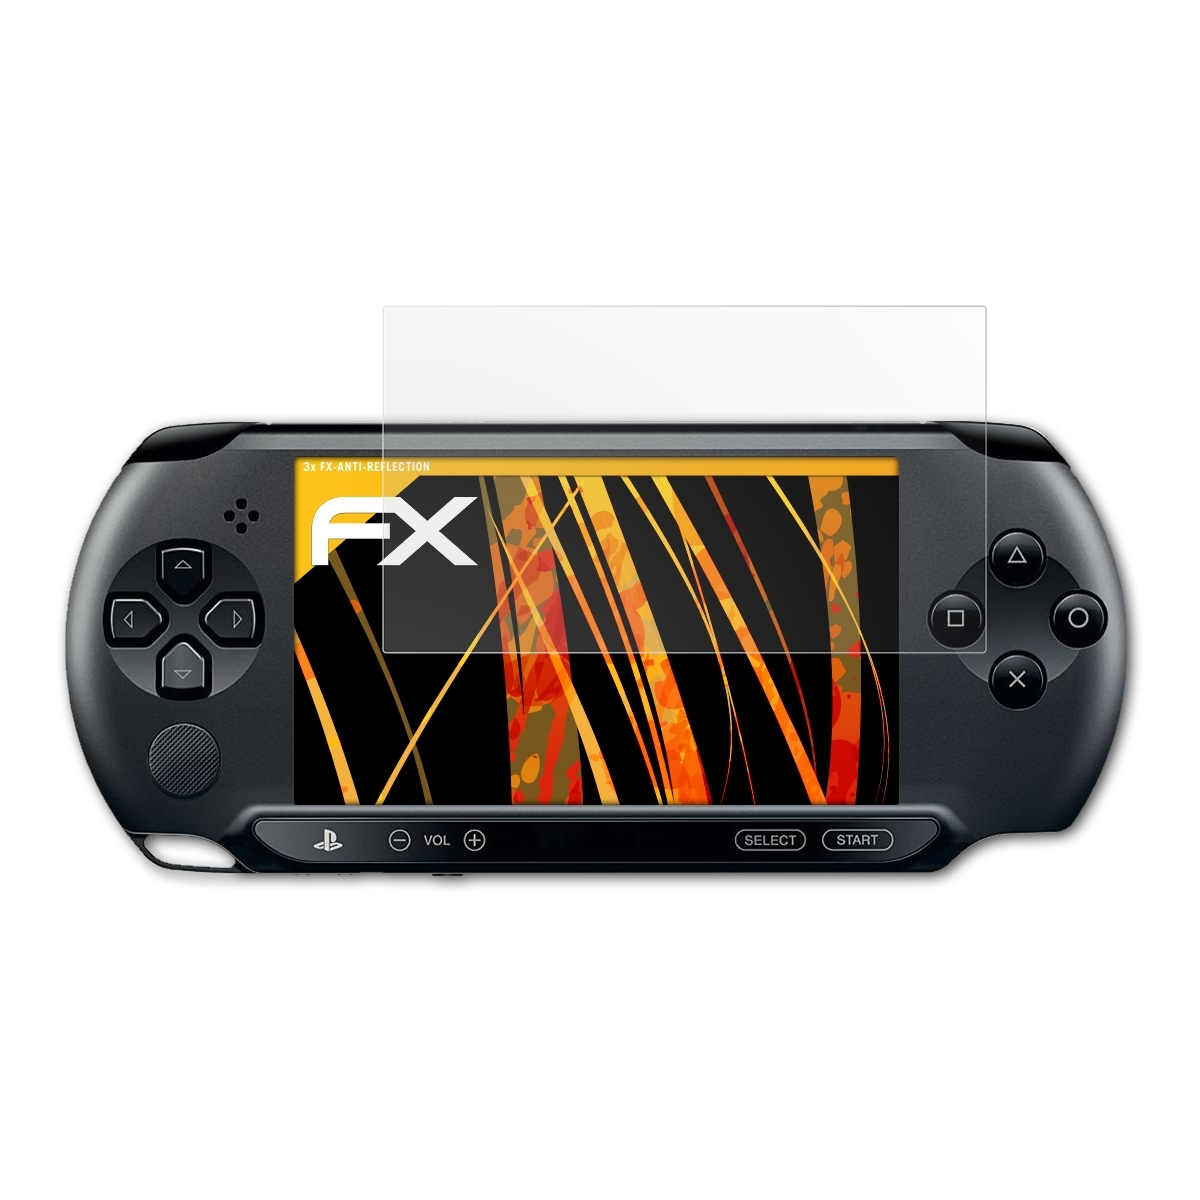 ATFOLIX 3x FX-Antireflex Displayschutz(für Sony / PSP-E1000 E1004)